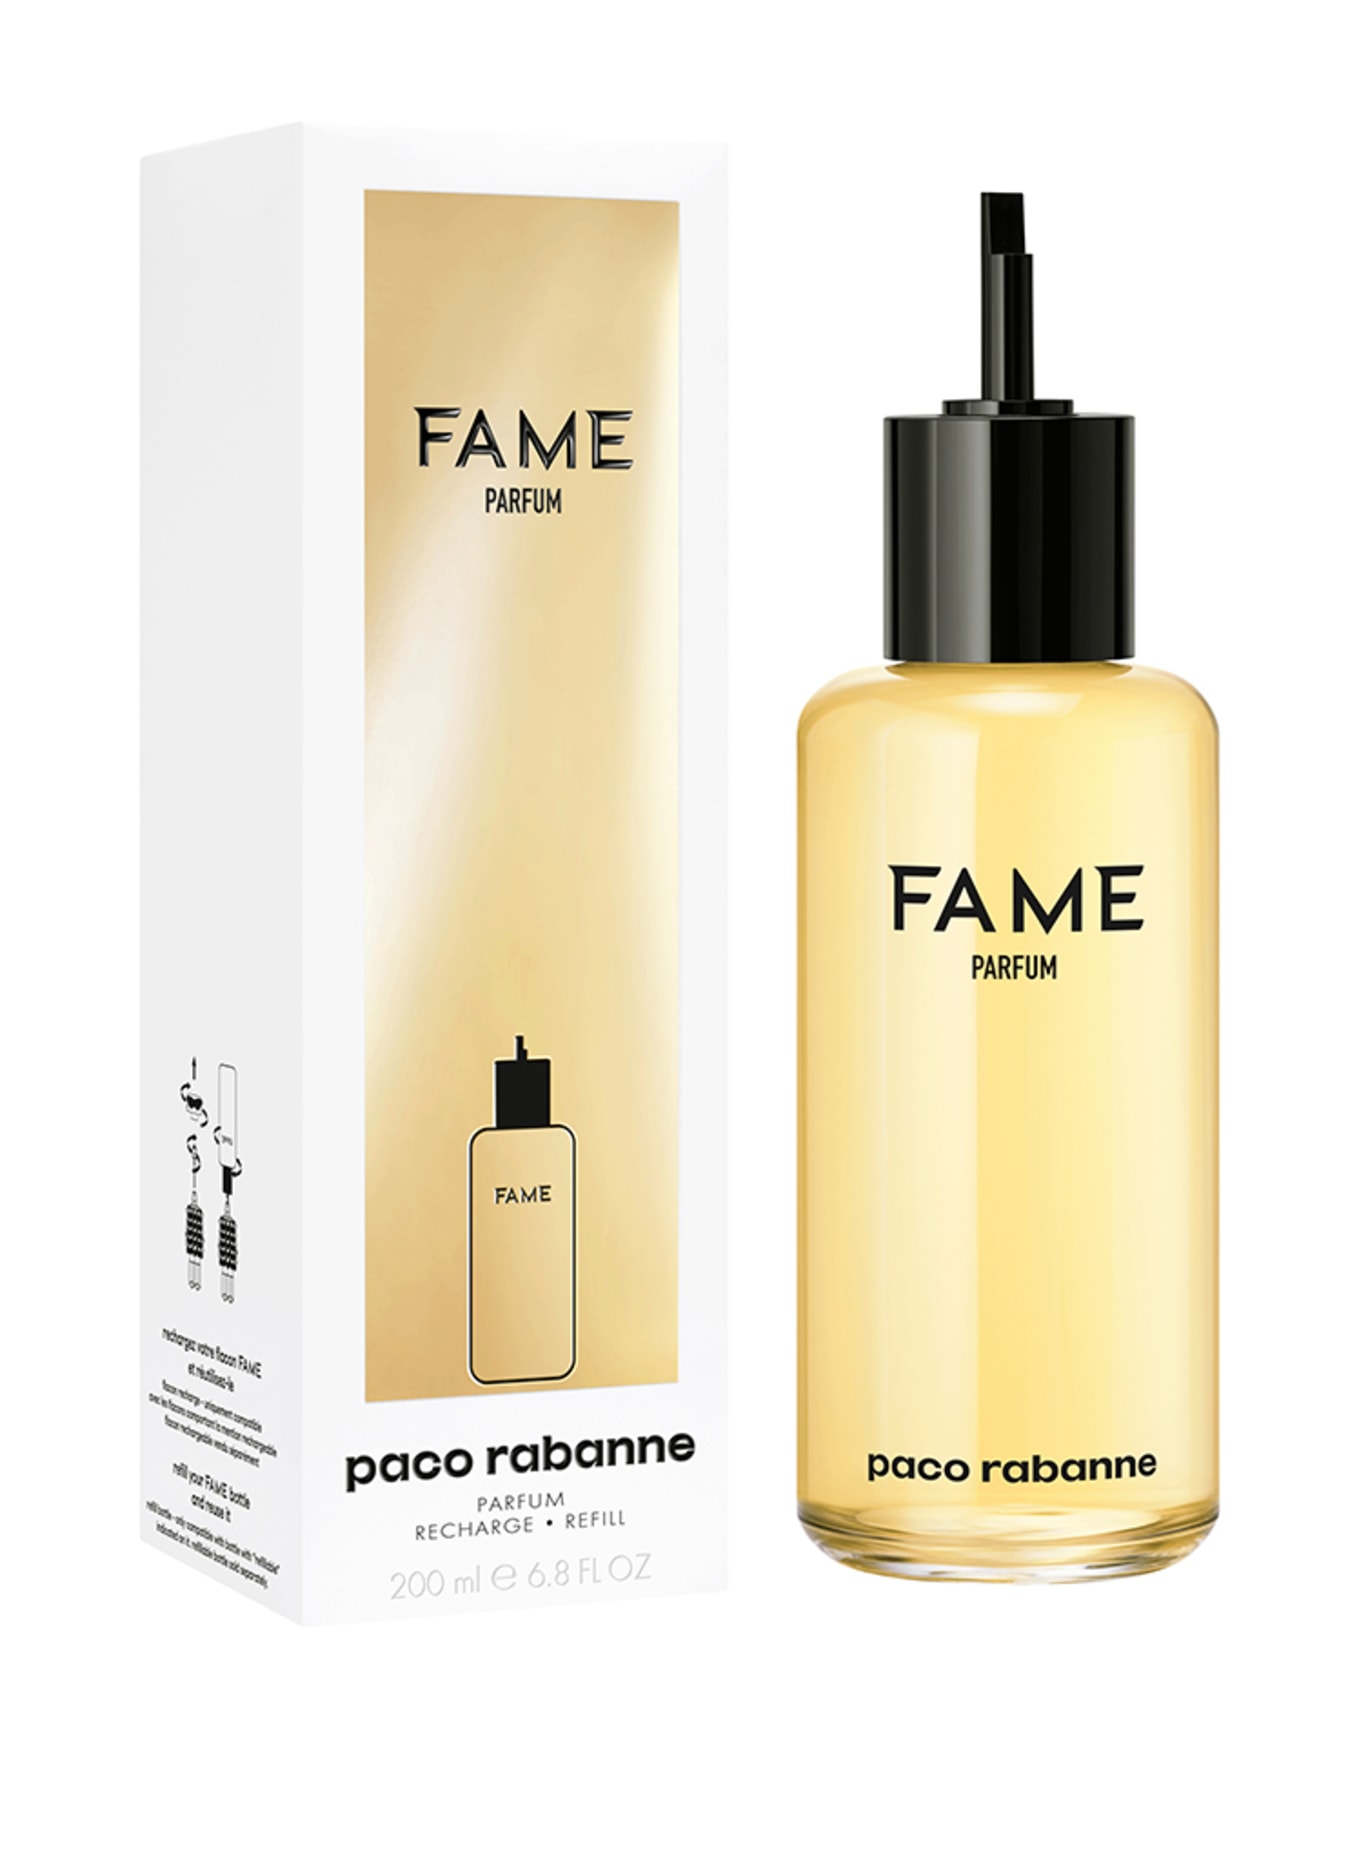 rabanne Fragrances FAME REFILL (Obrazek 2)